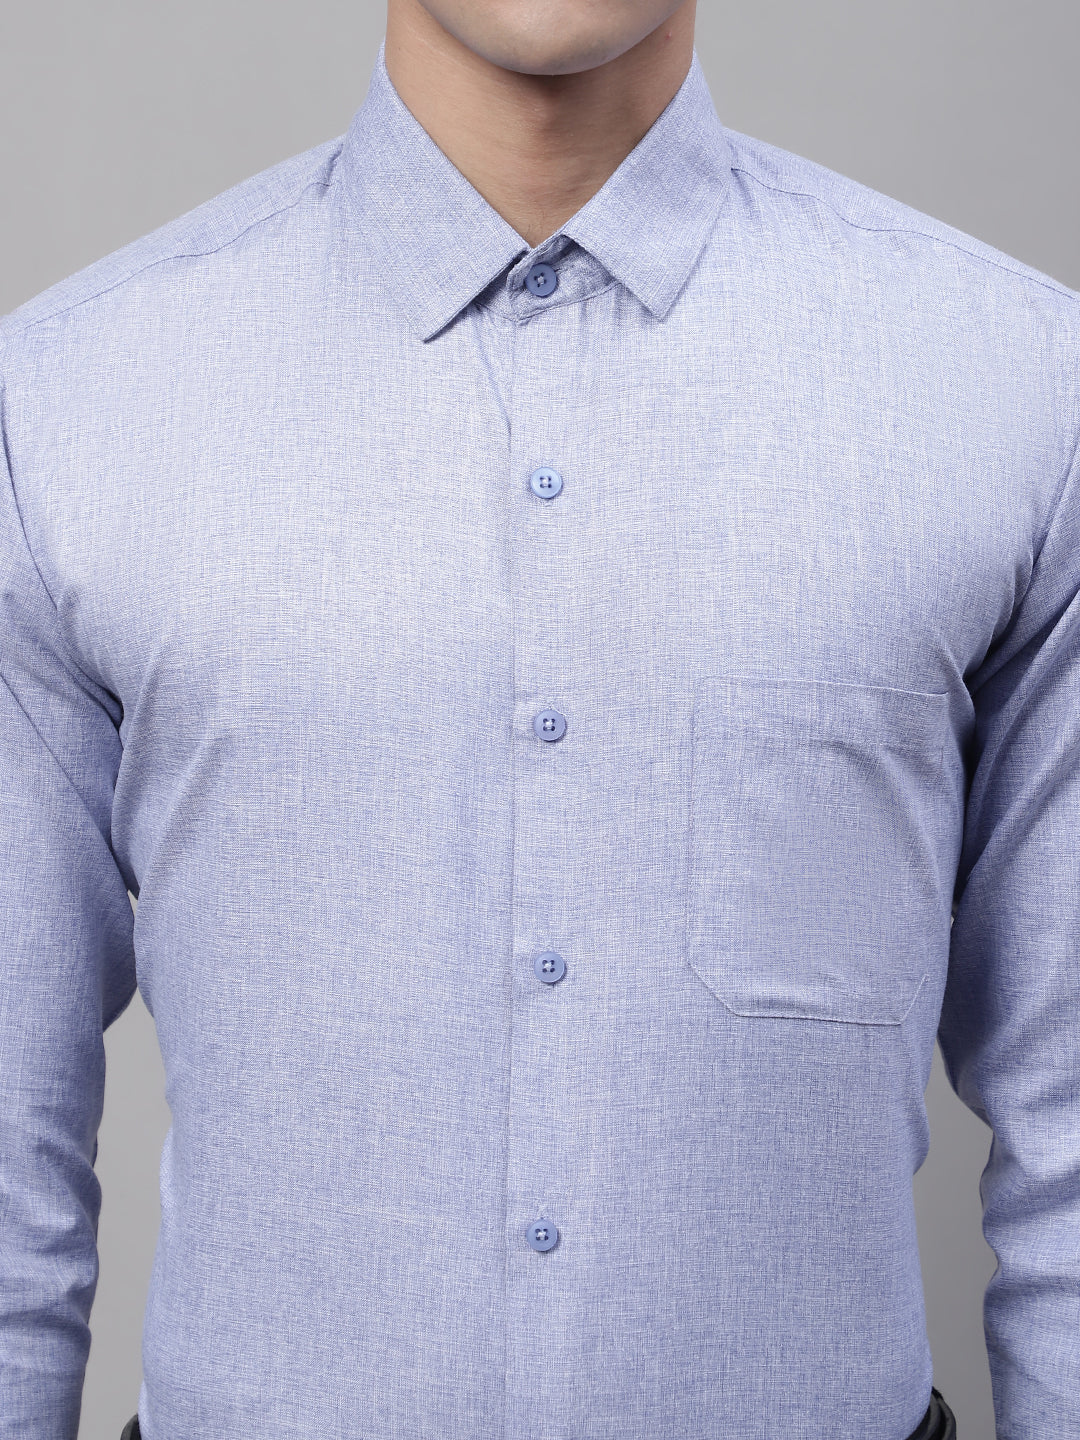 Men's Light-Grey Cotton Solid Formal Shirt